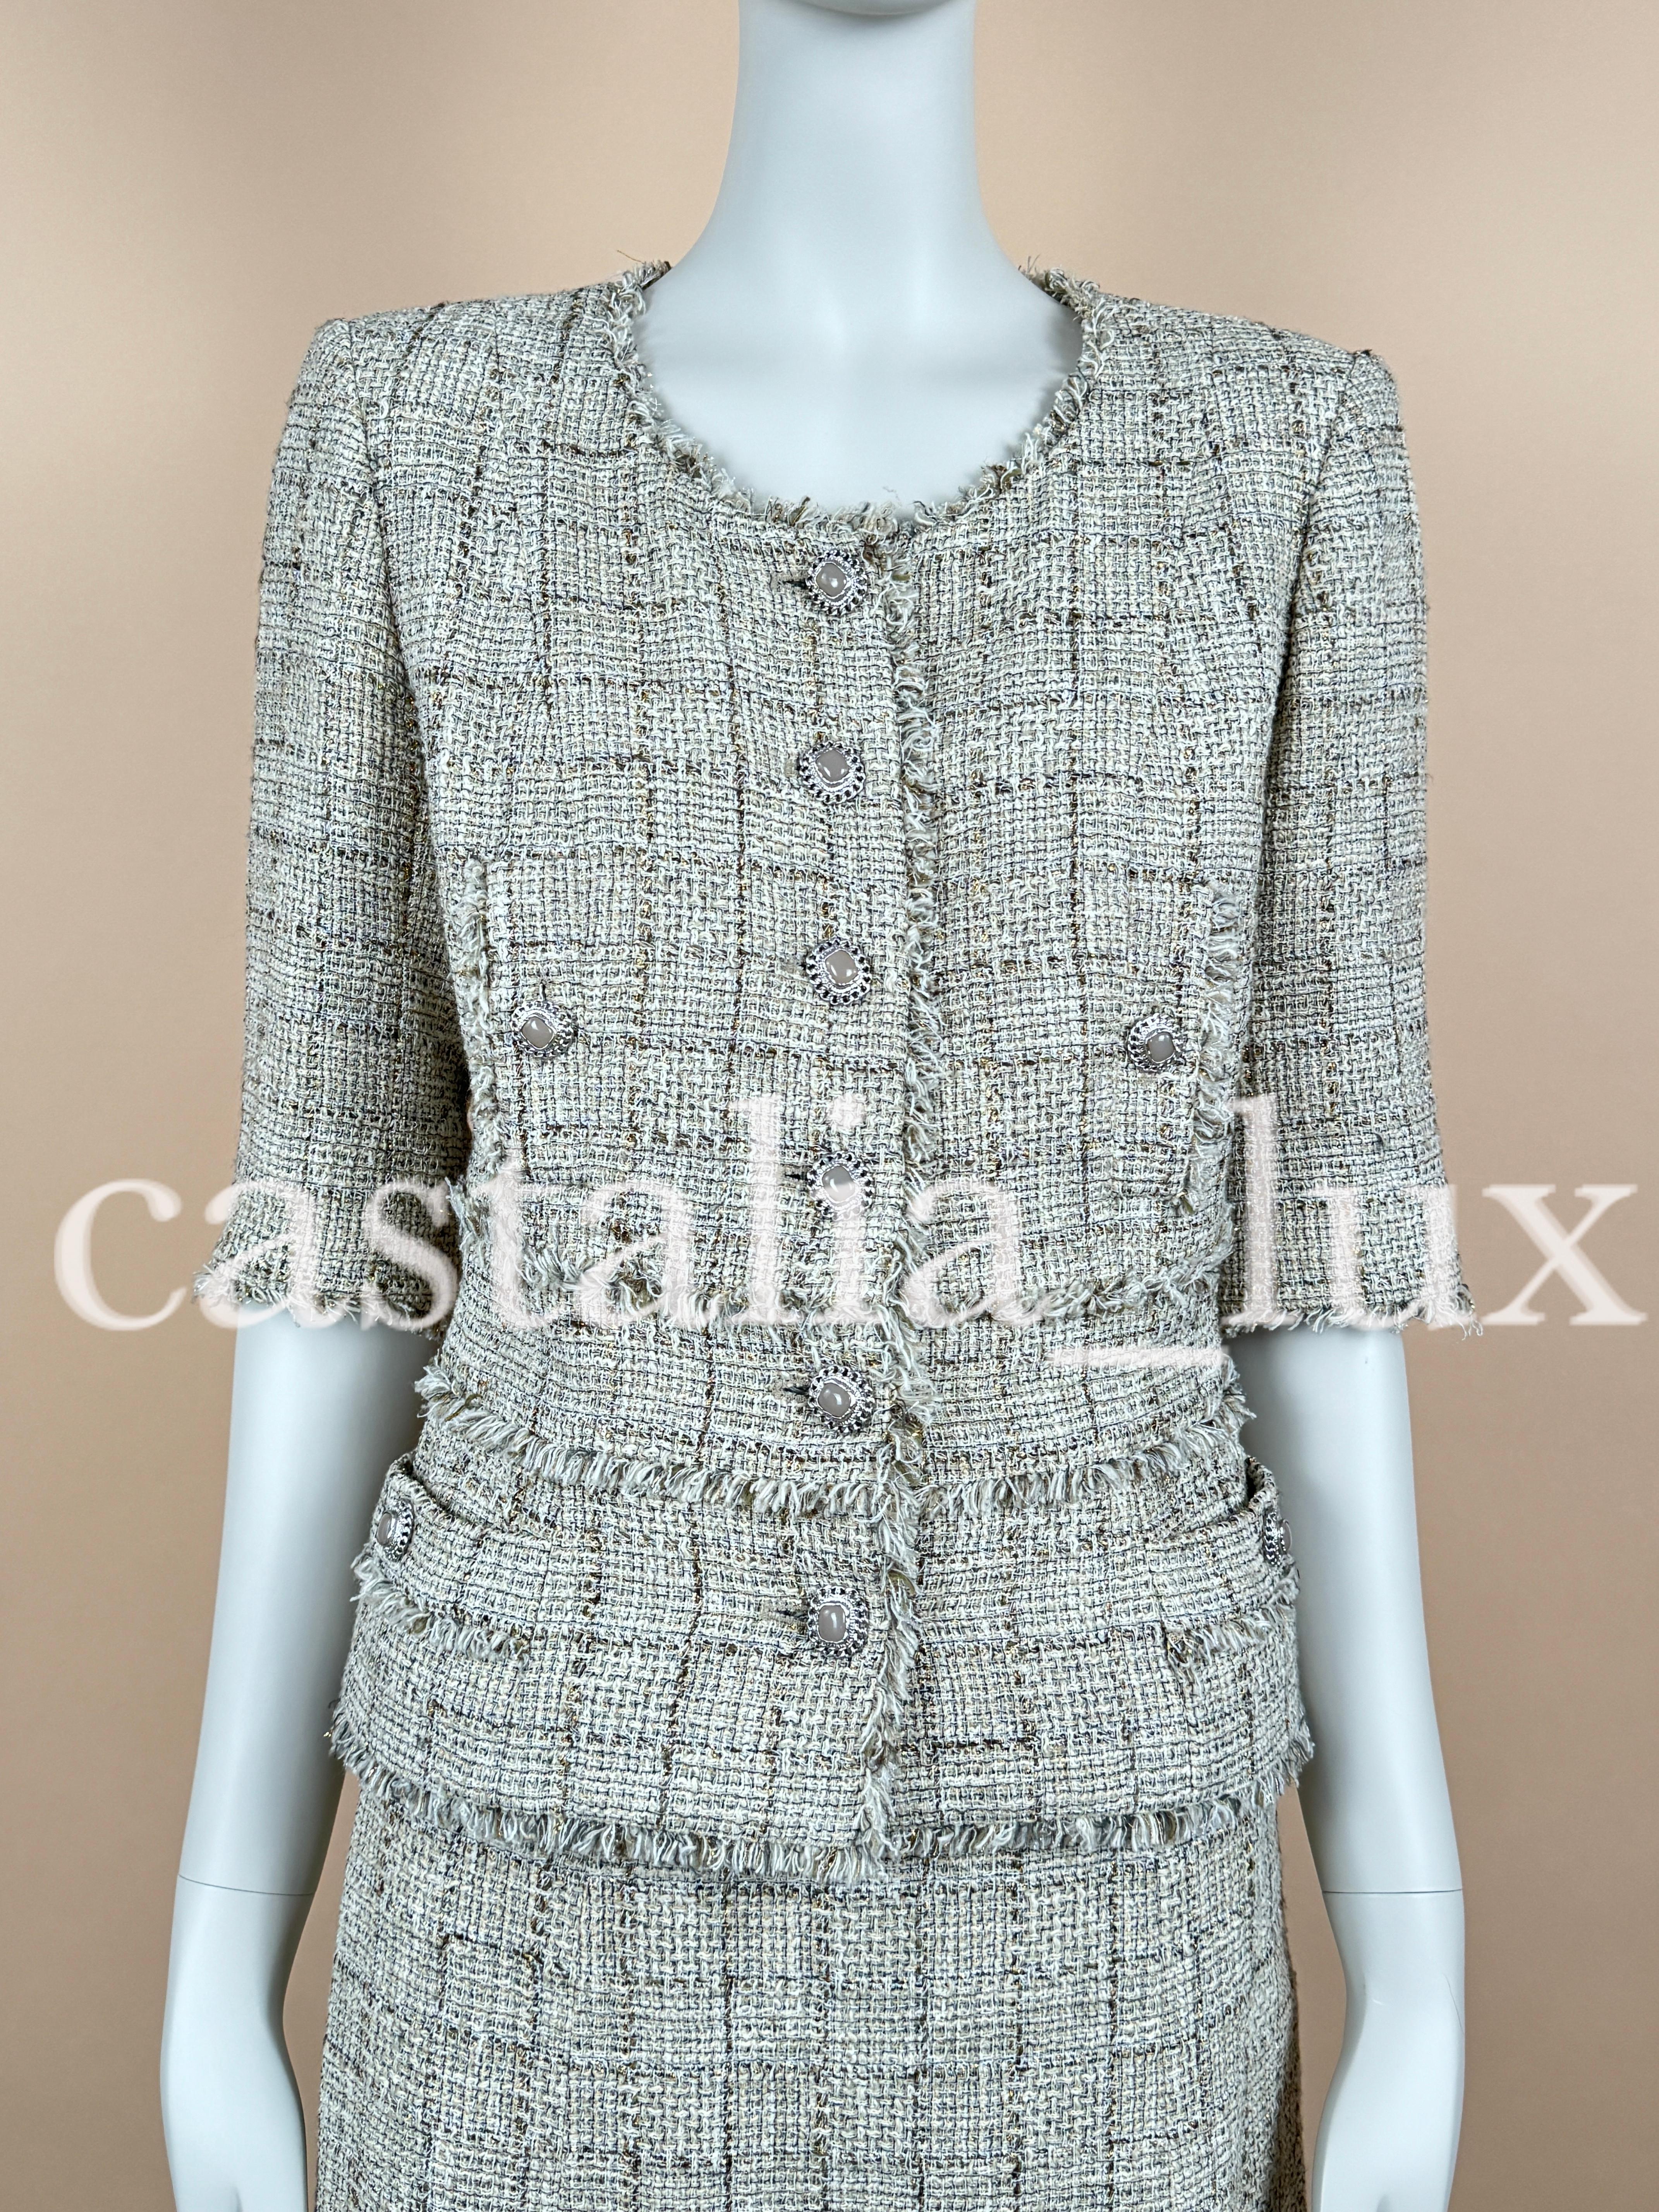 Chanel Gisele Bundchen Style Jewel Buttons Tweed Suit For Sale 4